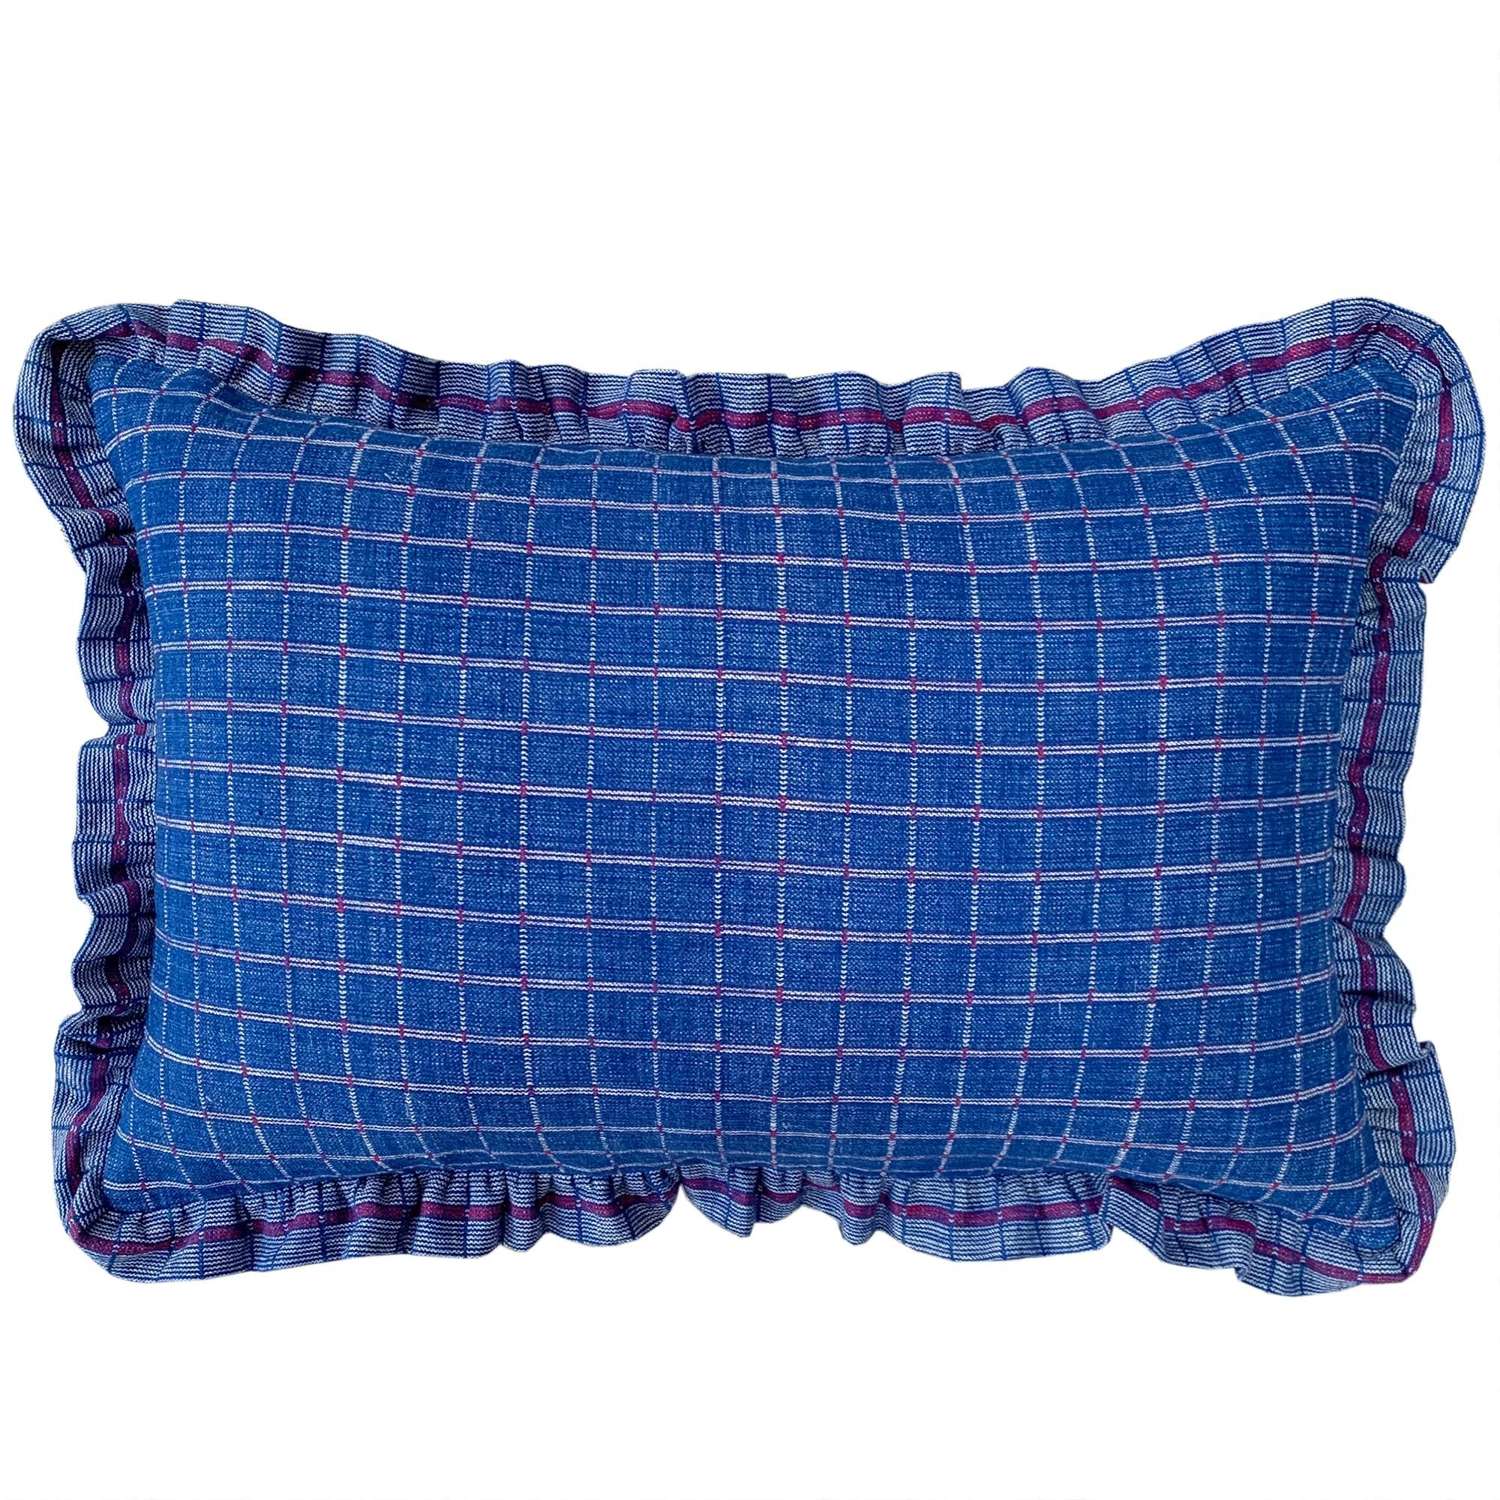 Songjiang cushions - indigo with frill trim